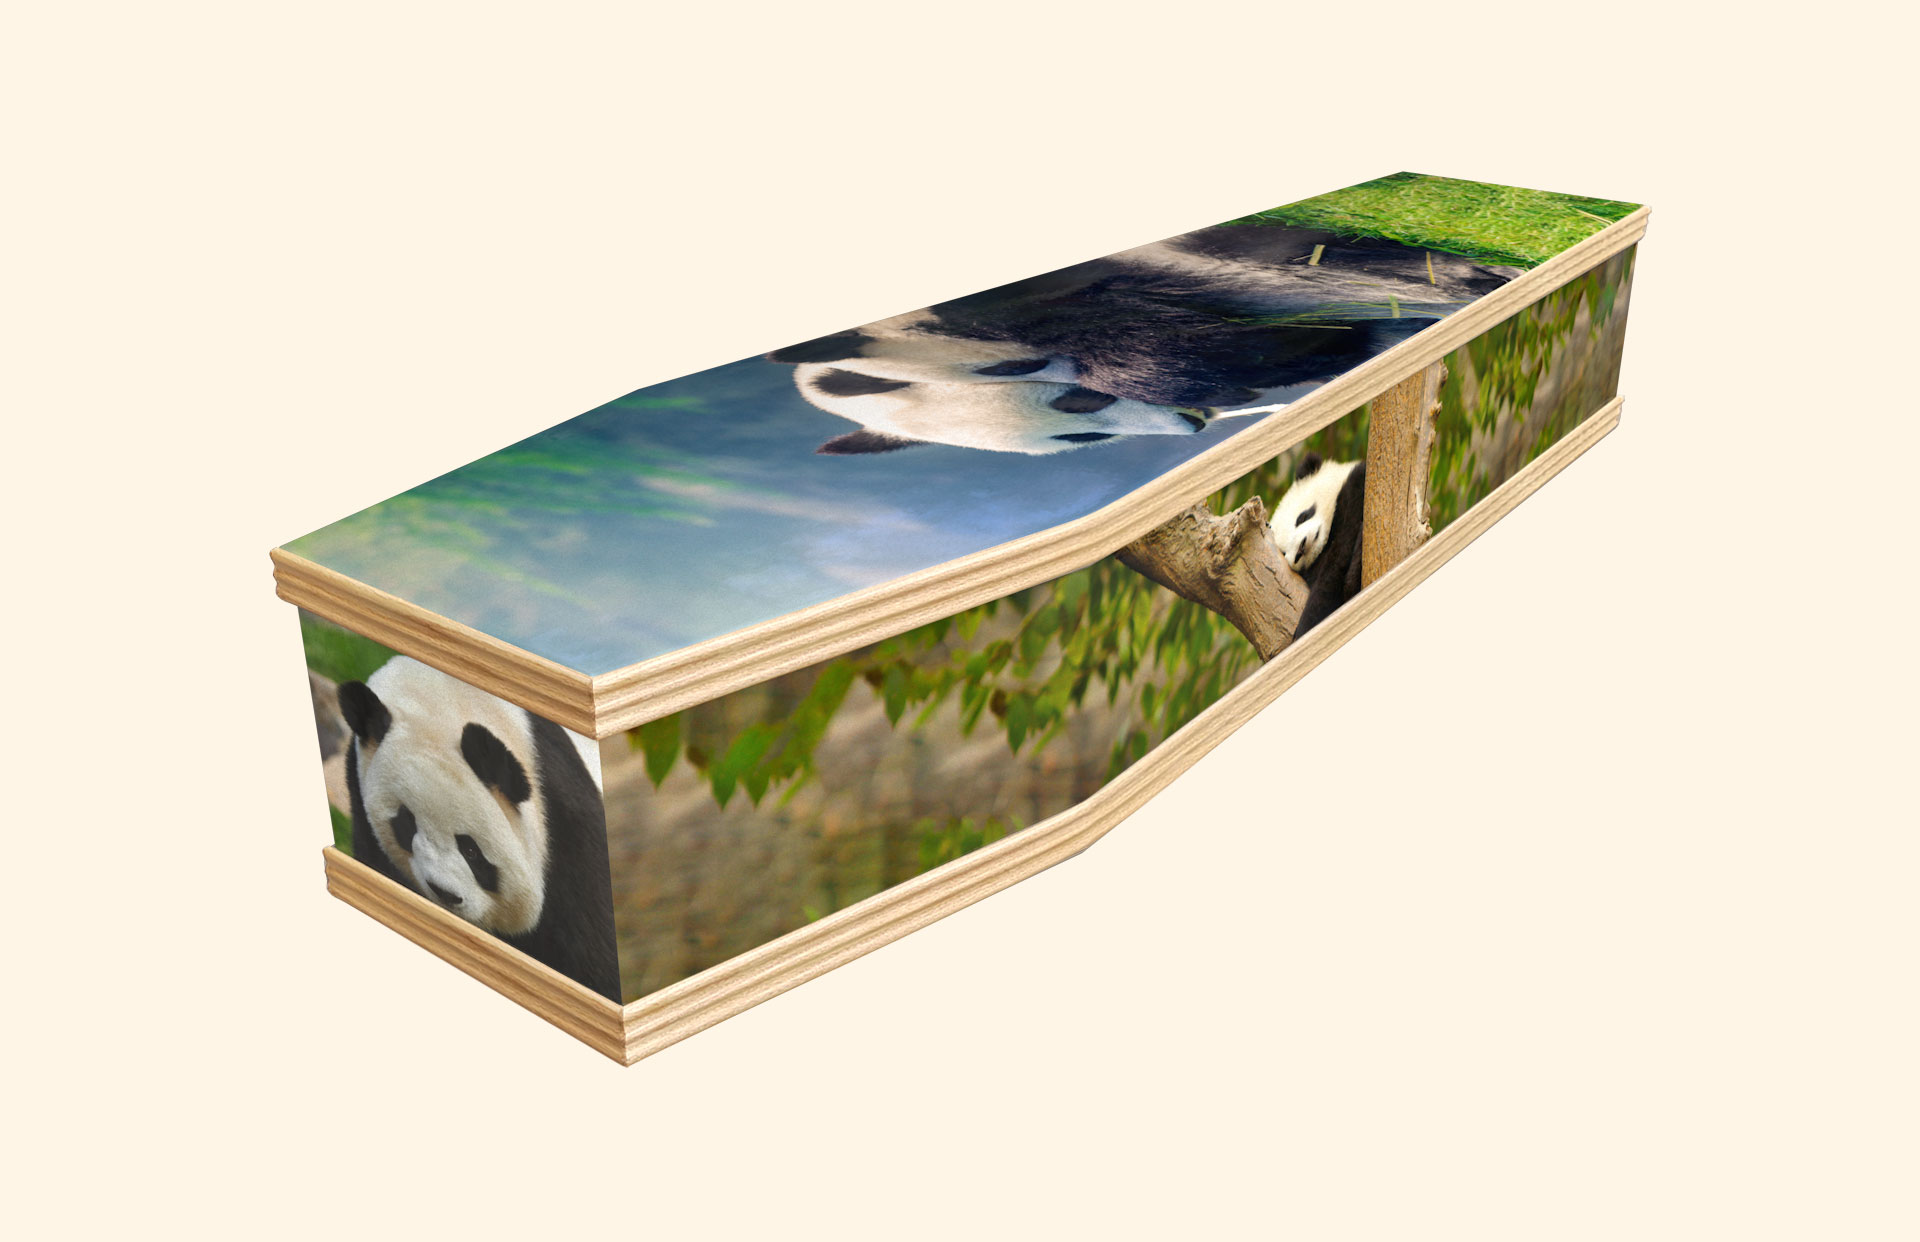 Panda Love design on a classic coffin